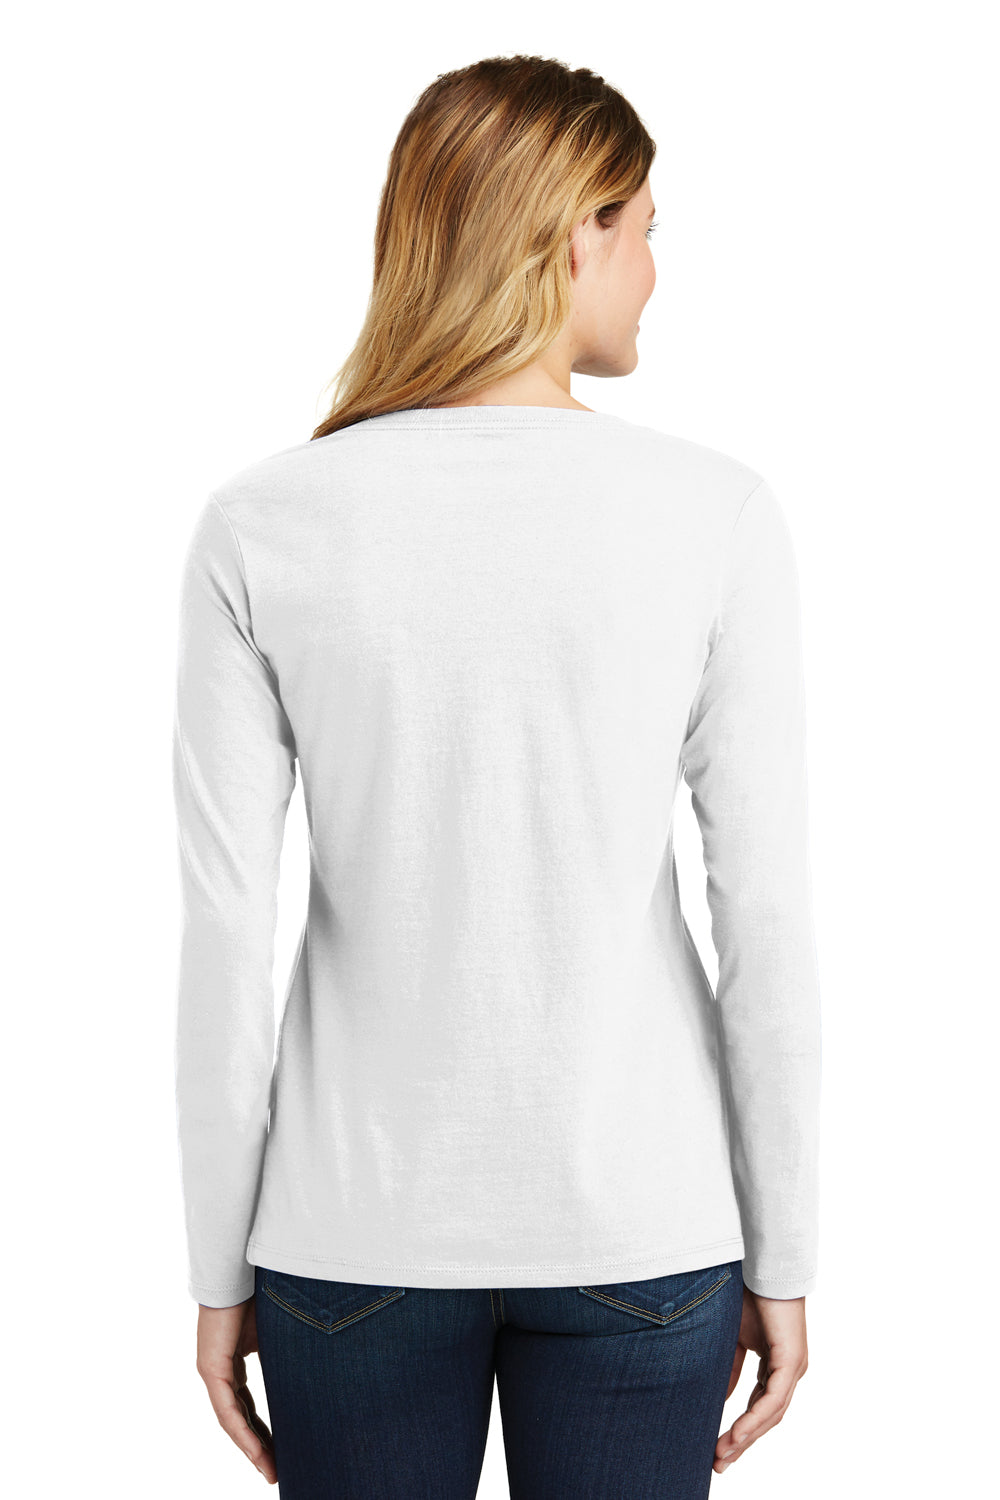 Port & Company LPC450VLS Womens Fan Favorite Long Sleeve V-Neck T-Shirt White Back